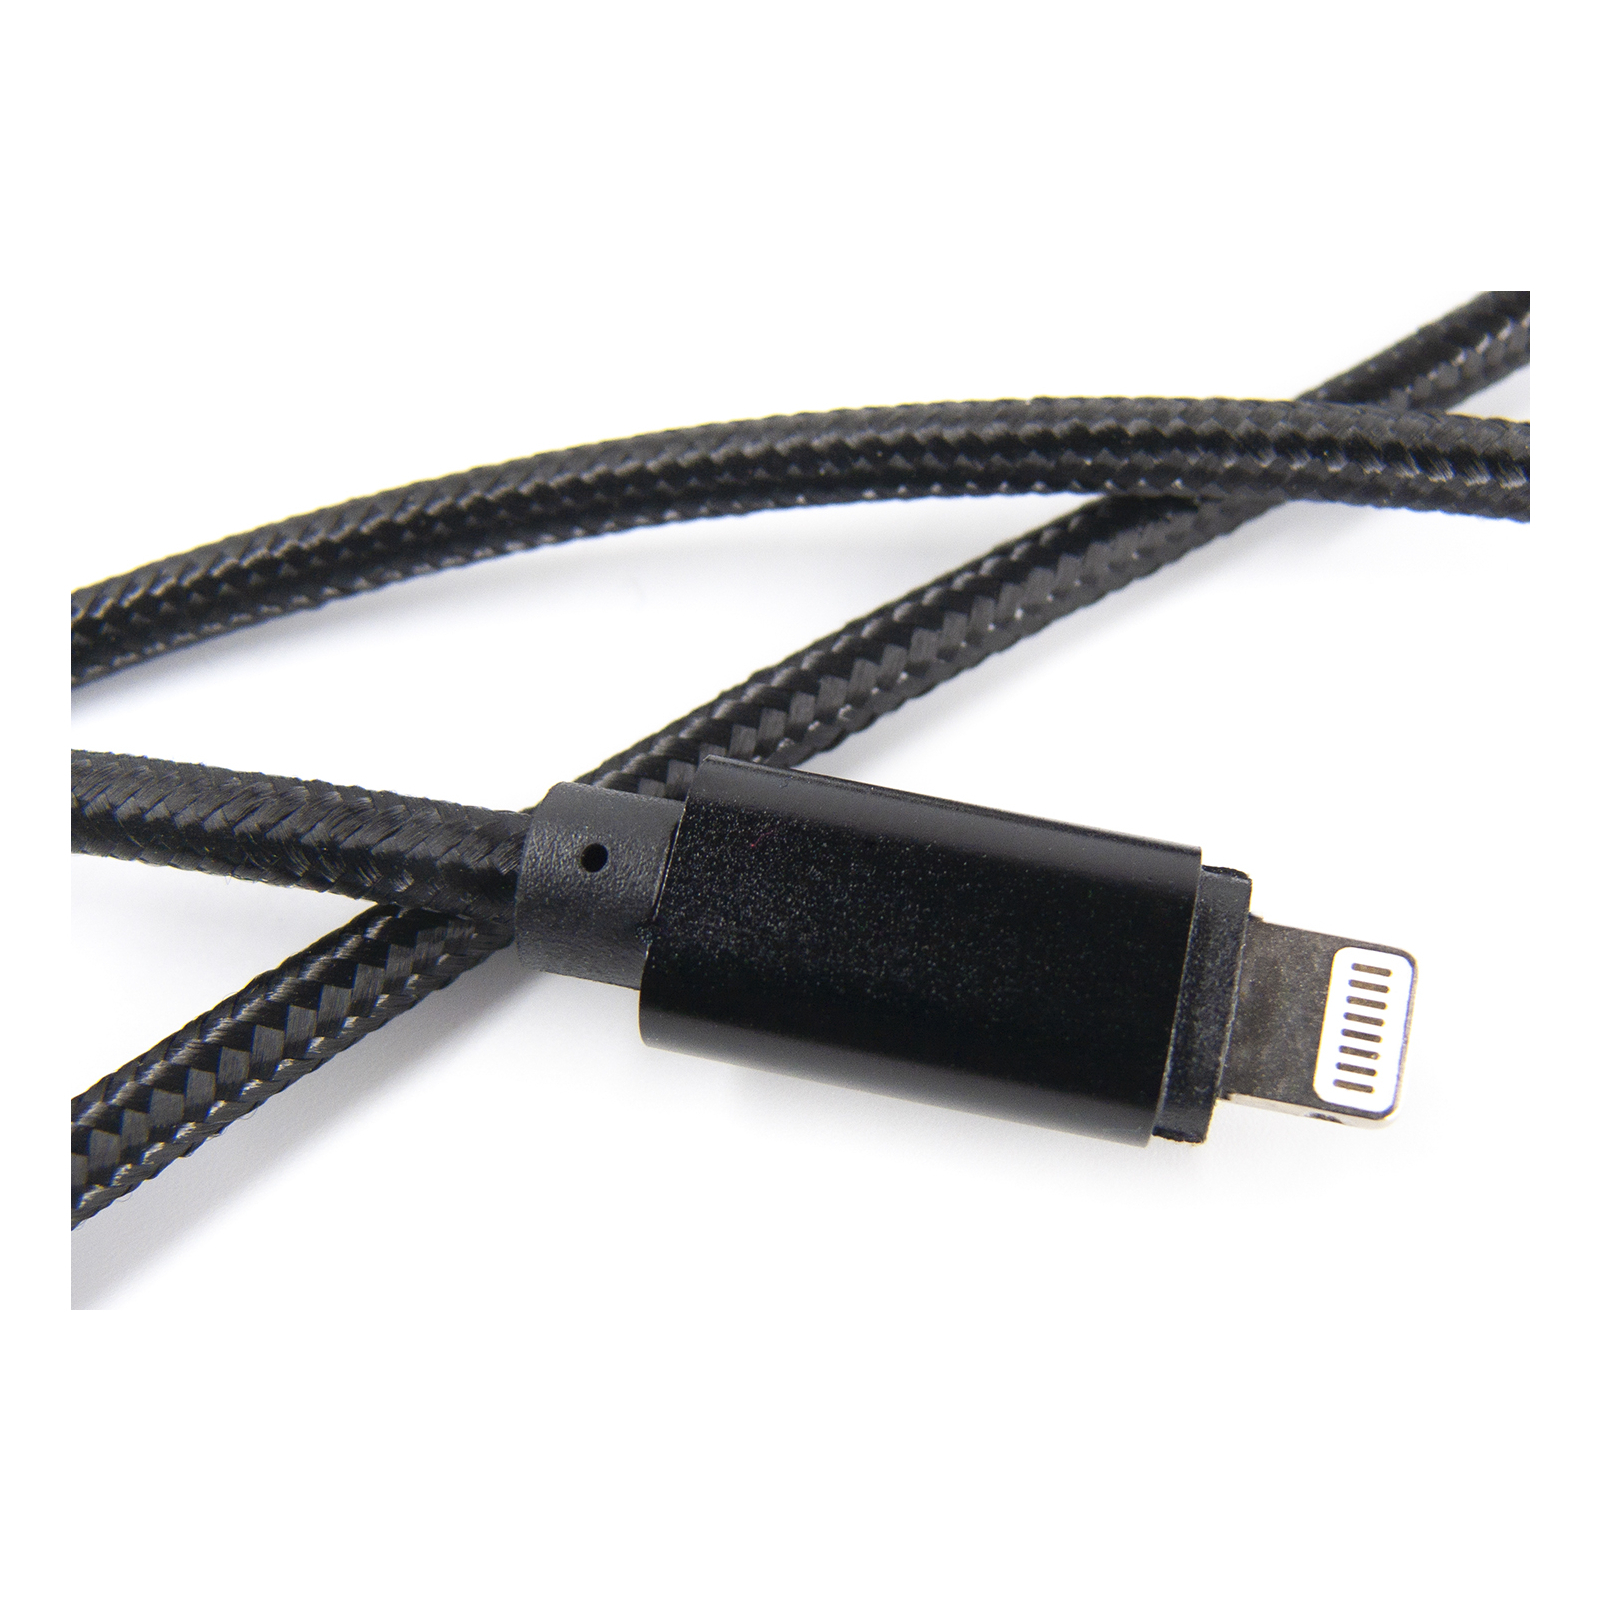 Дата кабель USB 2.0 AM to Lightning 0.2m black Dengos (NTK-L-SHRT-BLACK) зображення 2